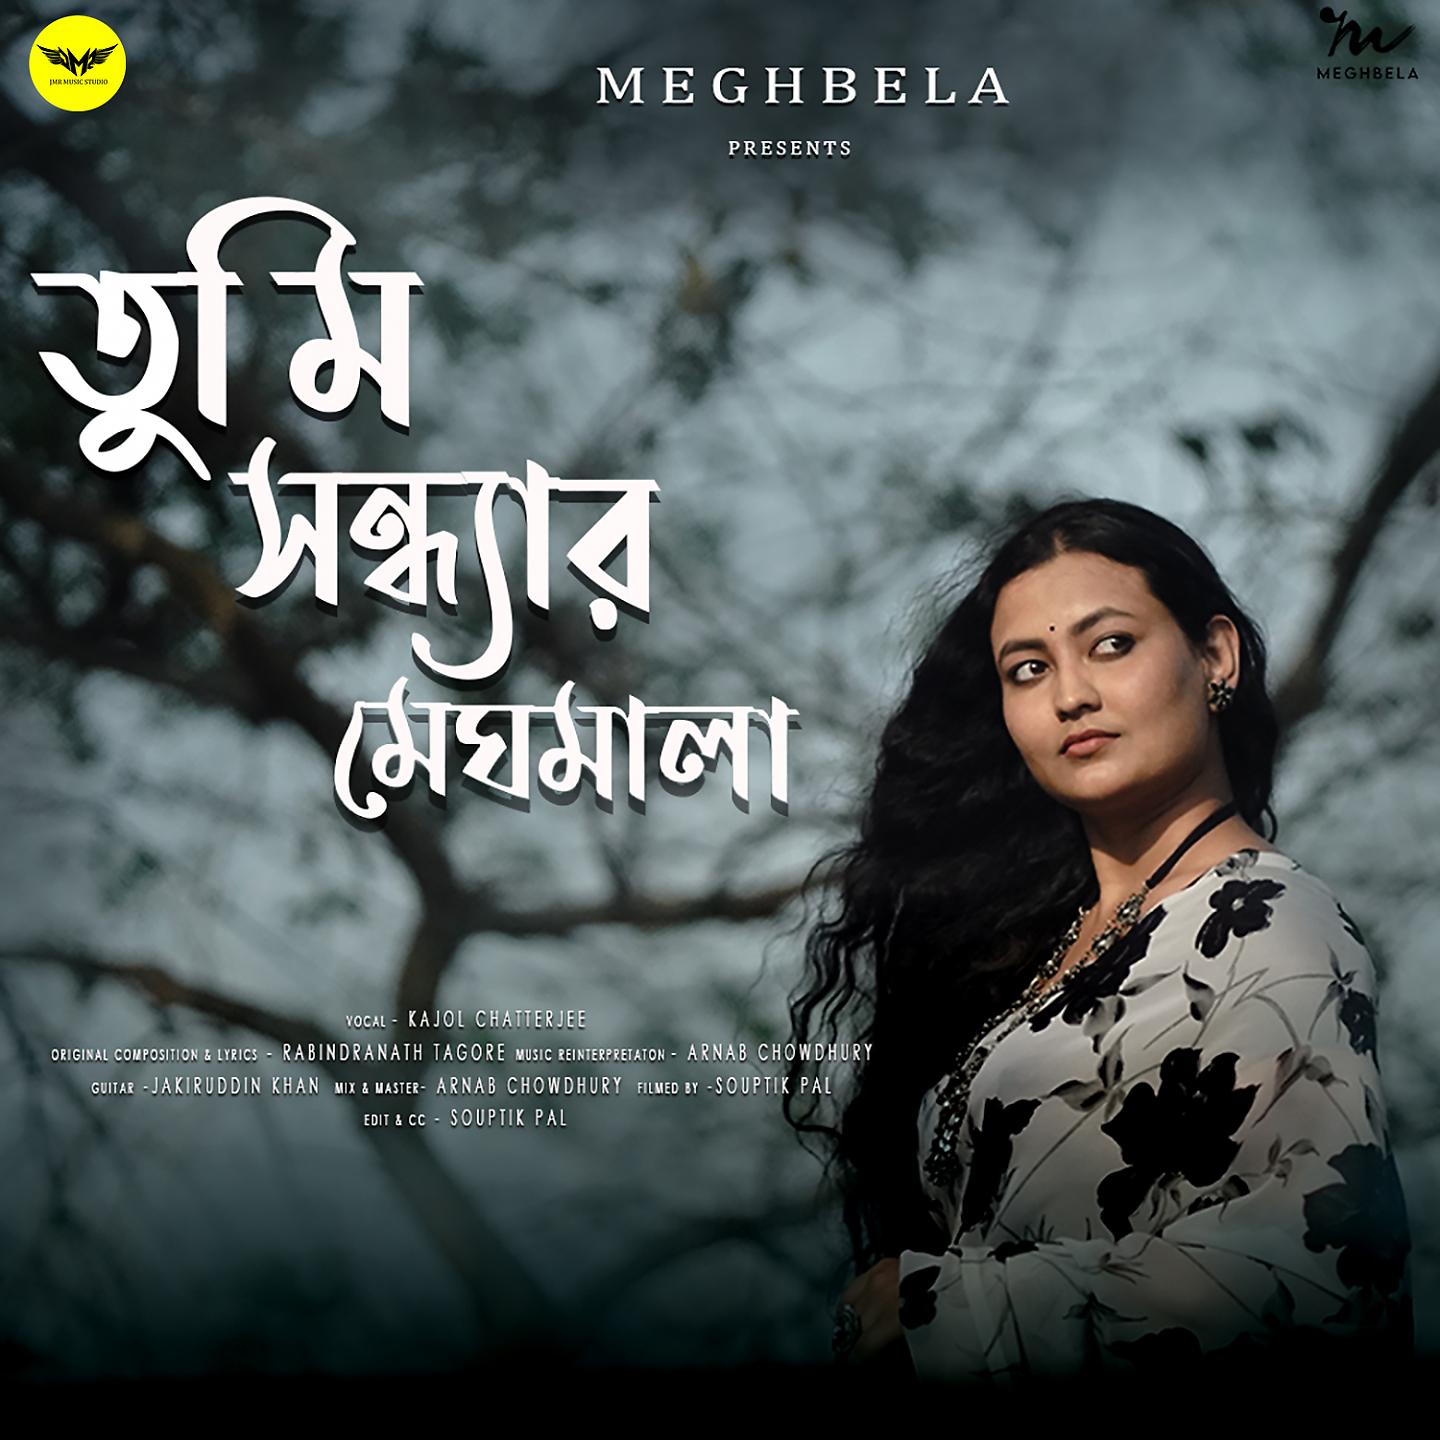 Постер альбома Tumi Sondhyar Meghmala